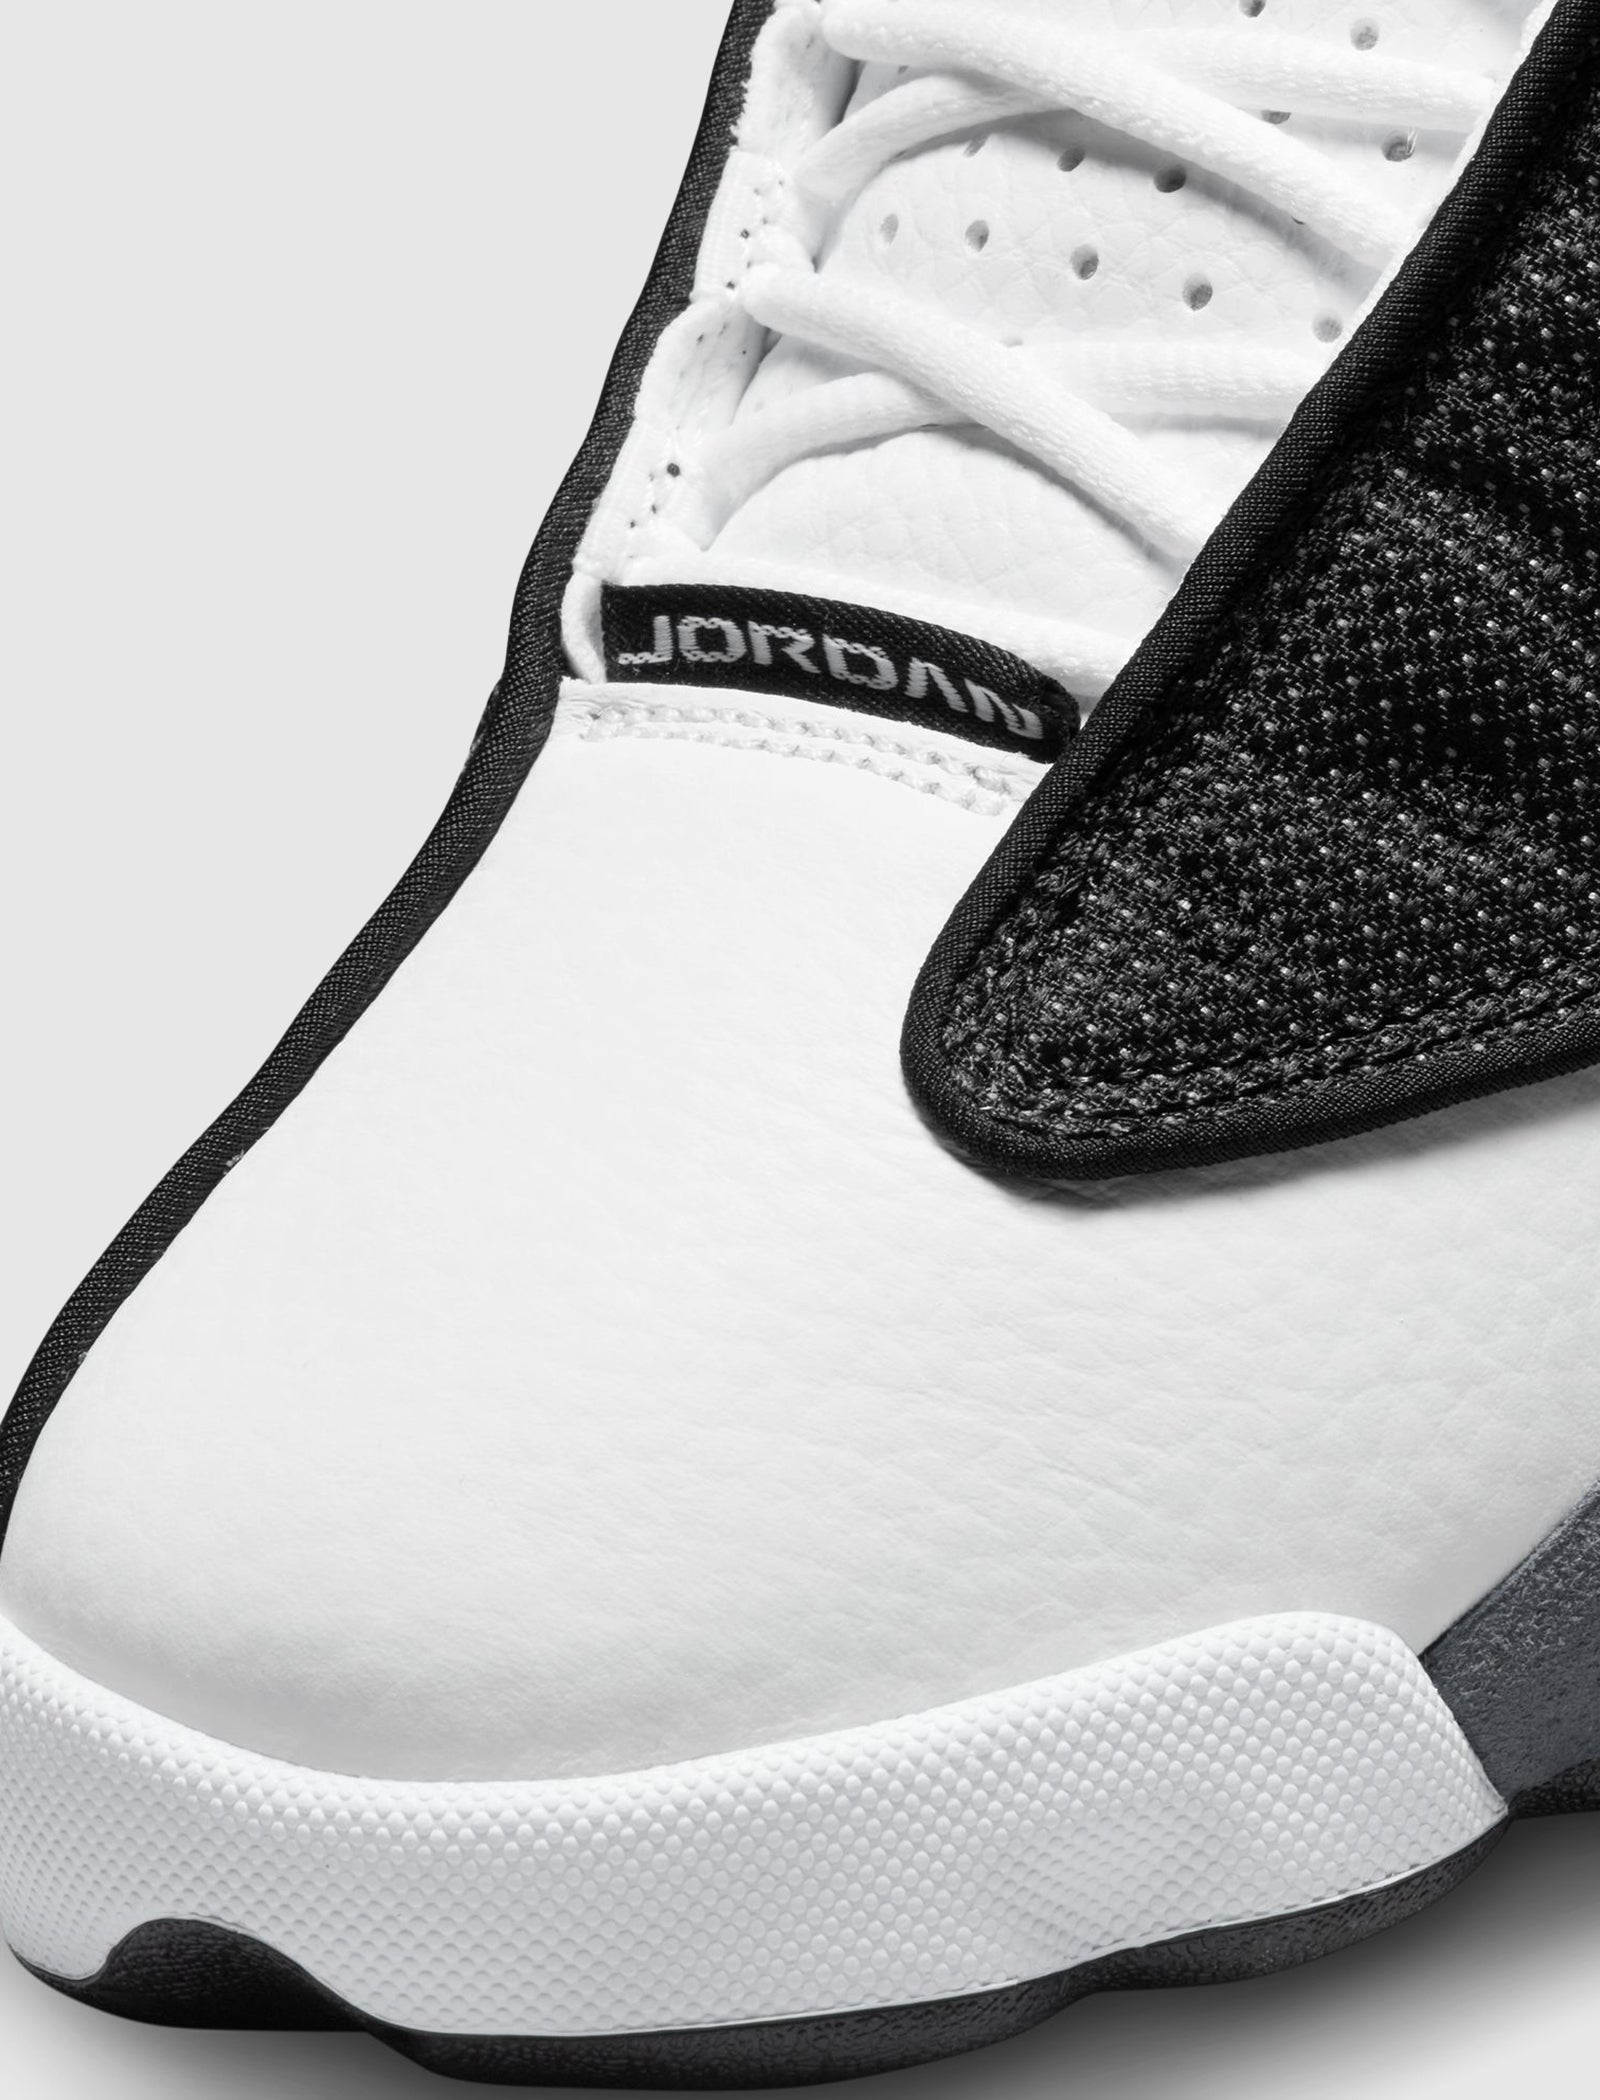 Louis Vuitton Tie Dye Jordans 13 Shoes Flint Sneaker - Banantees